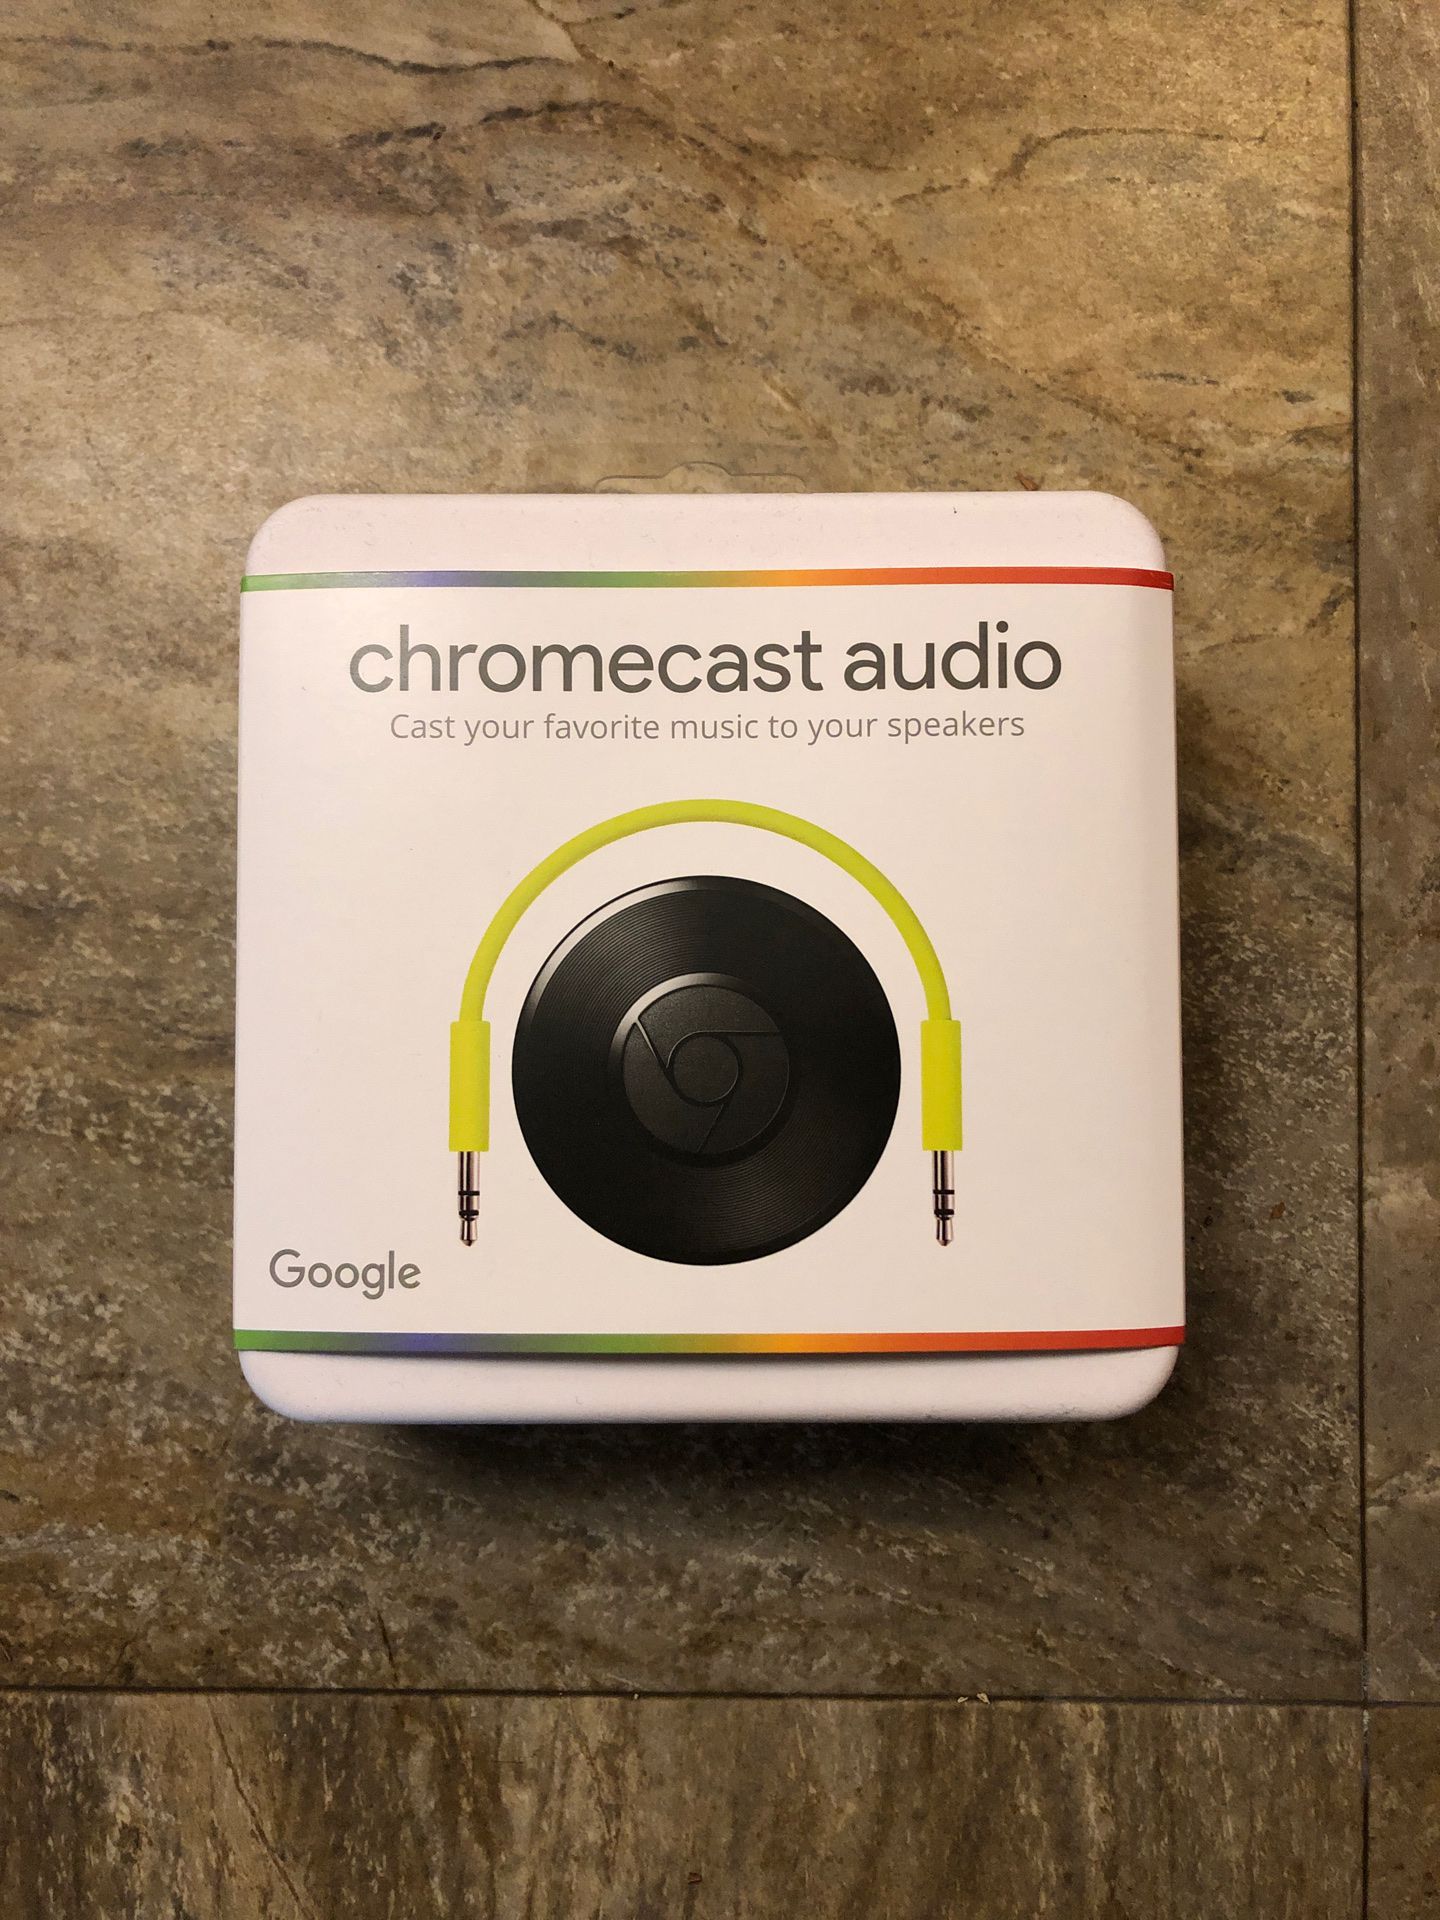 Chromecast Audio by Google